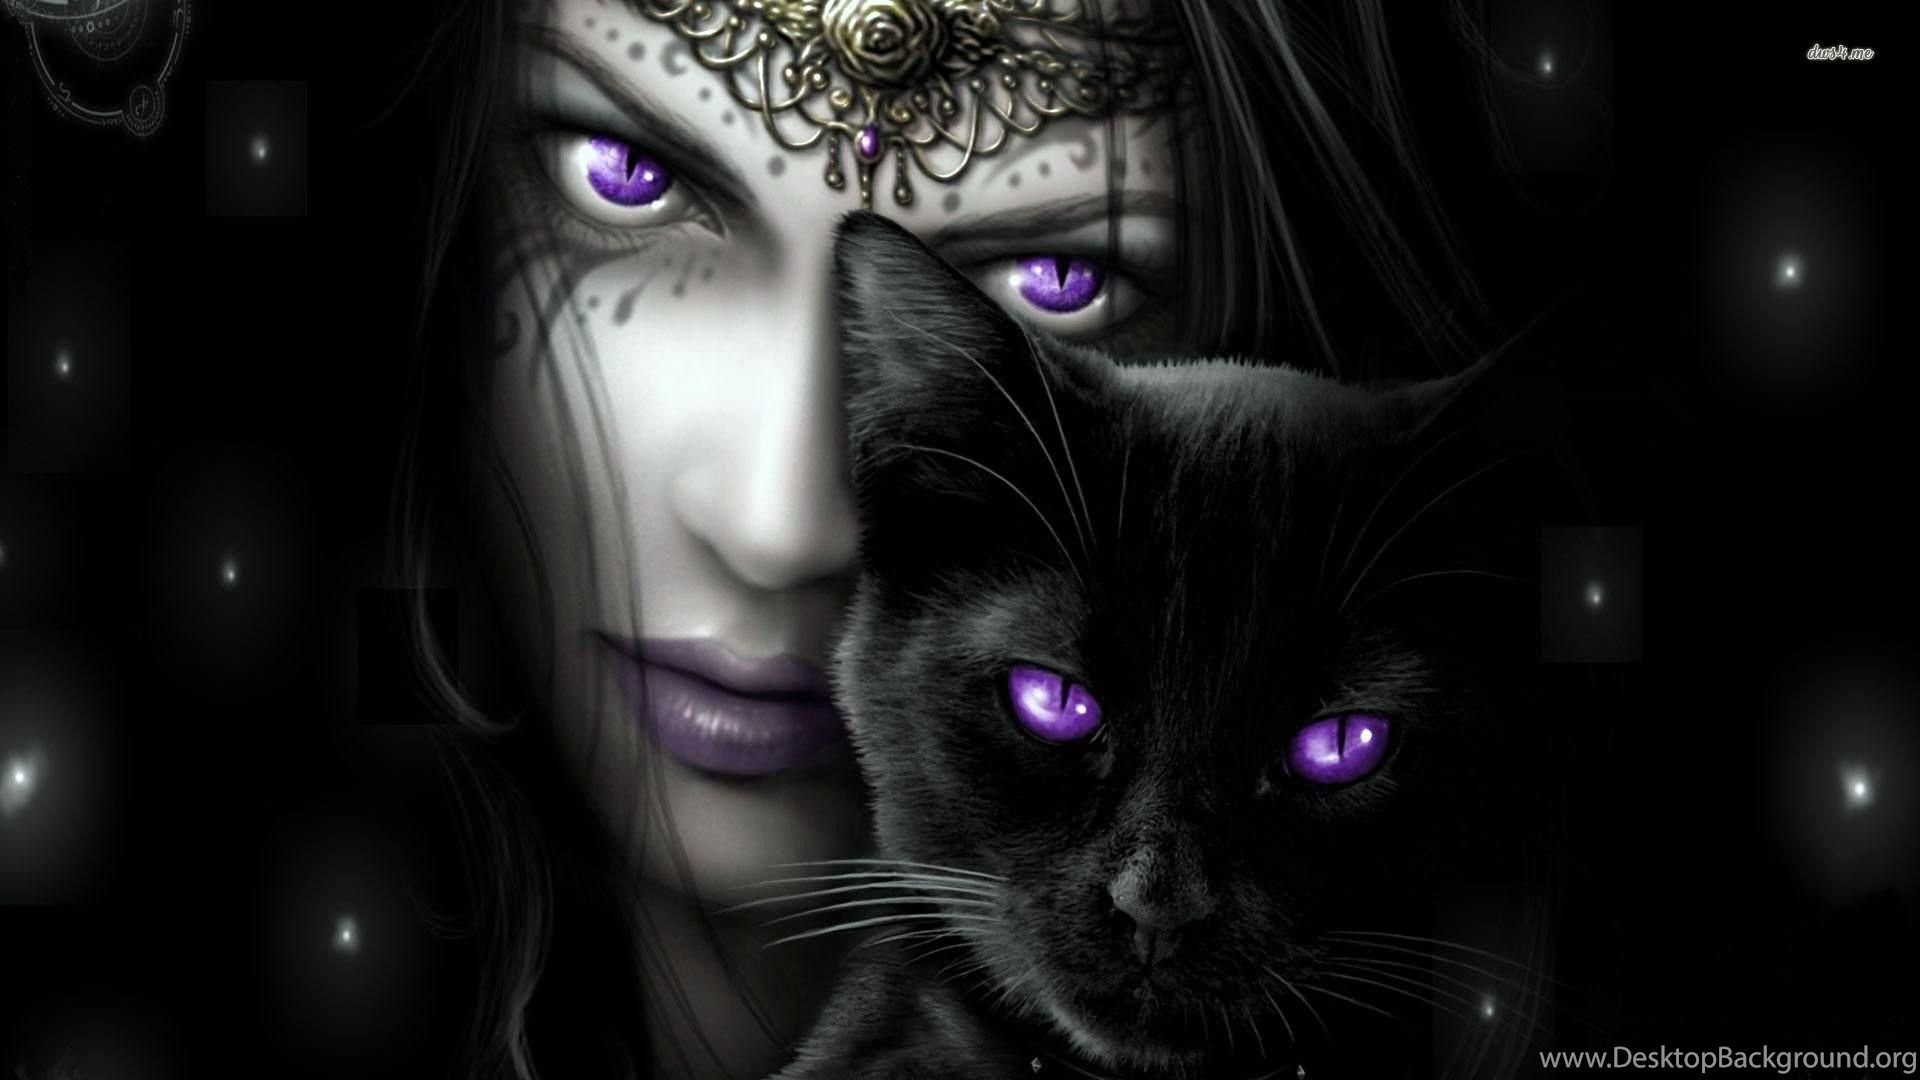 Purple Eyed Woman With Her Black Cat Wallpaper Fantasy. Desktop Background